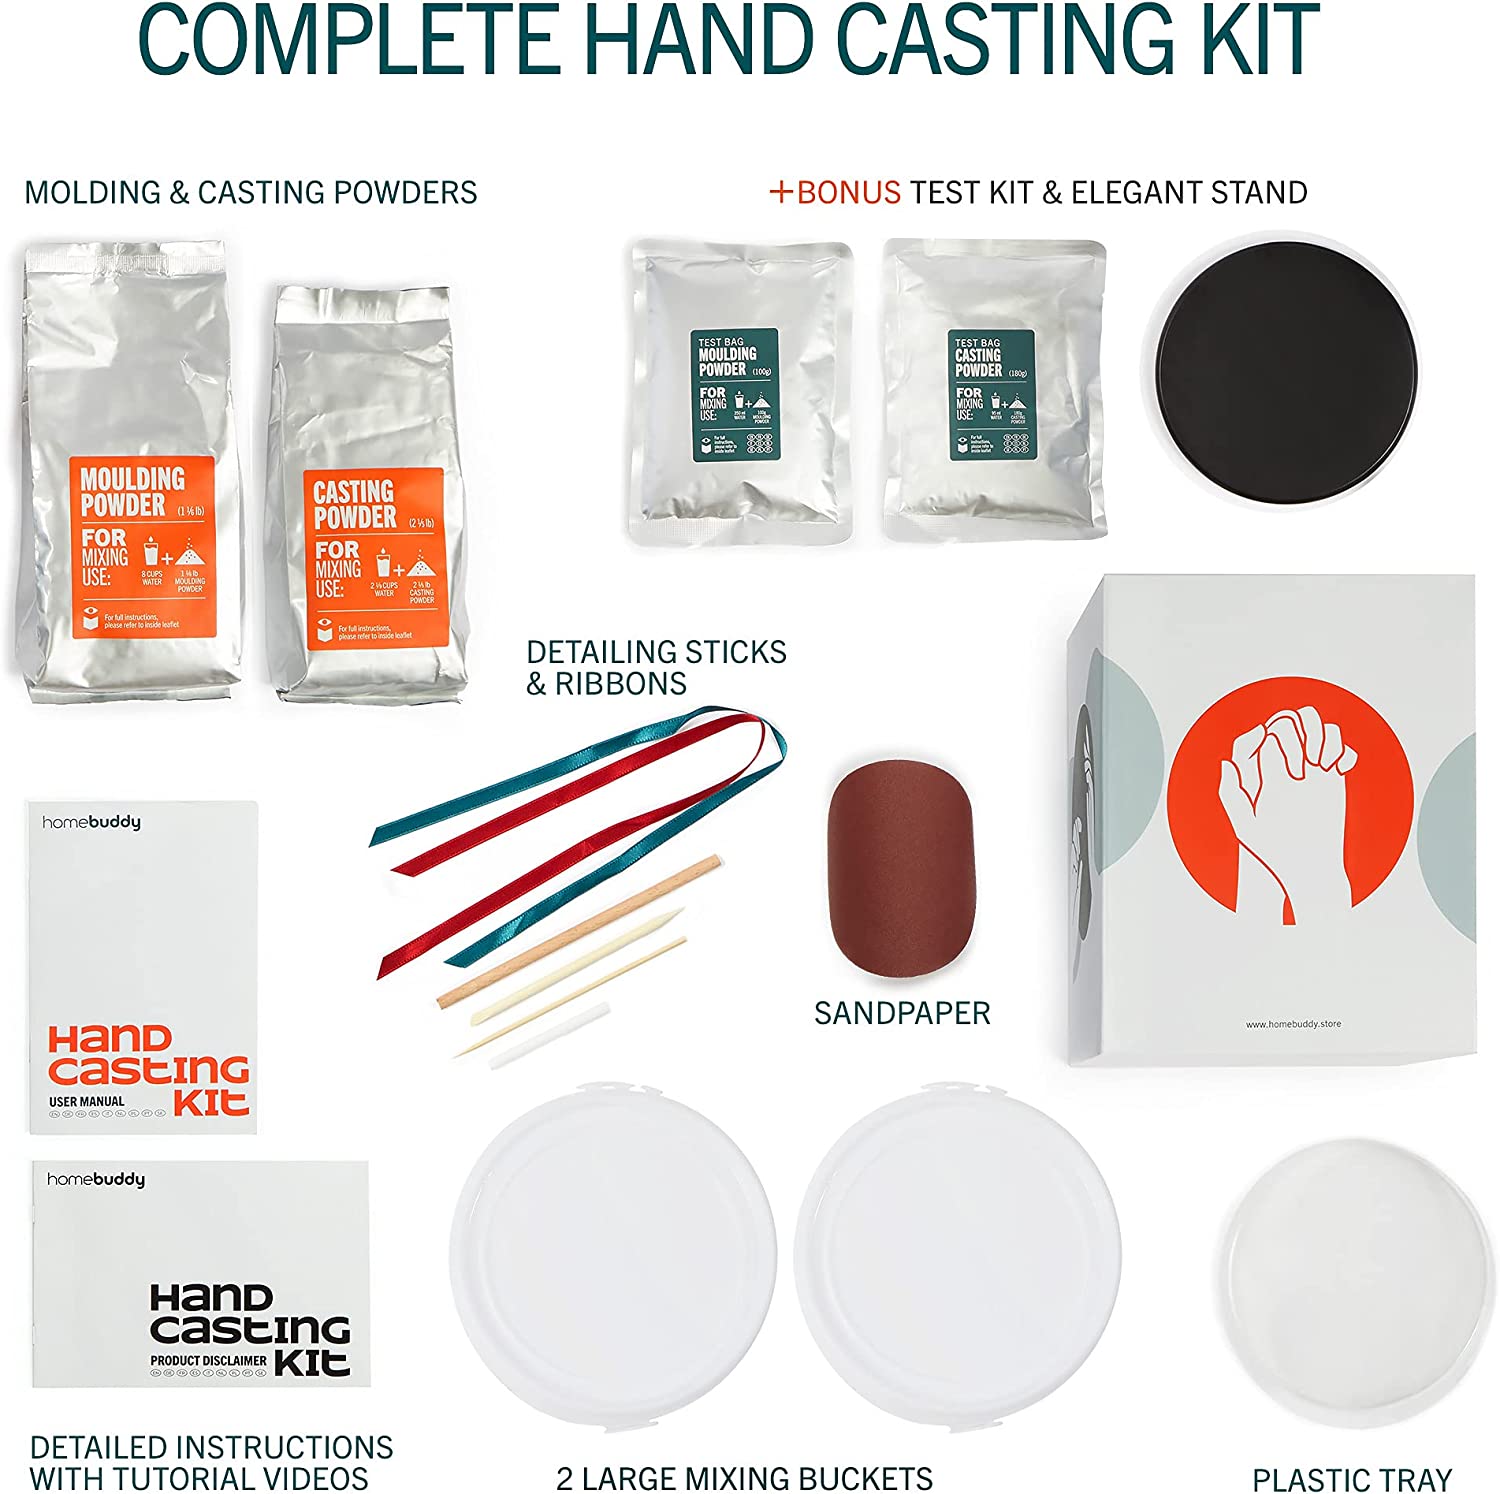 Hand Casting Kit for Couples, Casting Kit Alginate Molding Powder